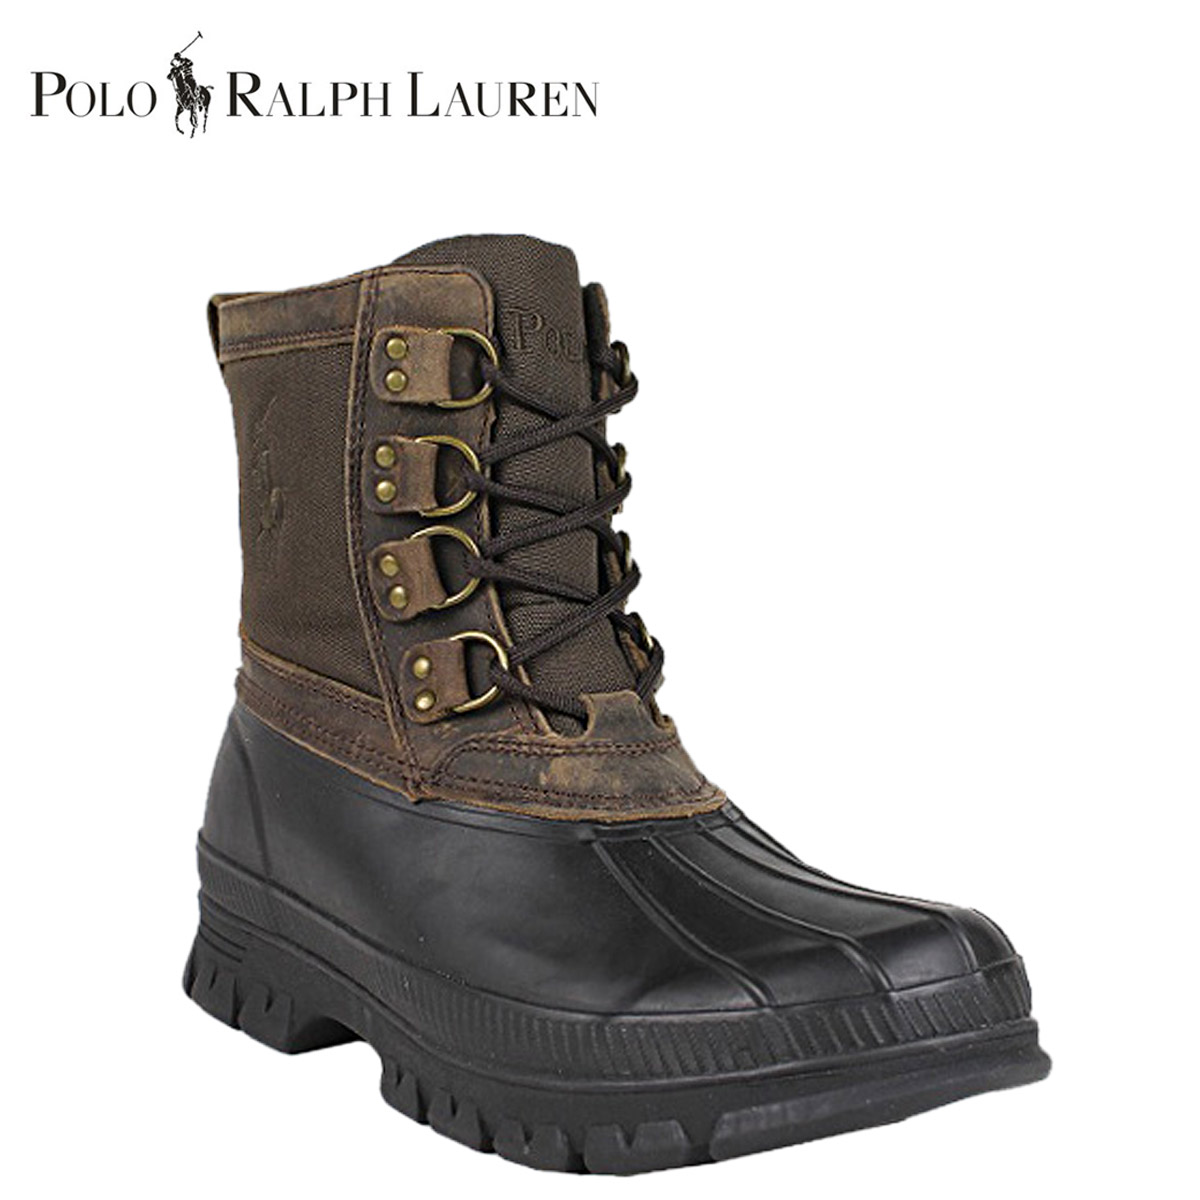 ralph lauren work boots